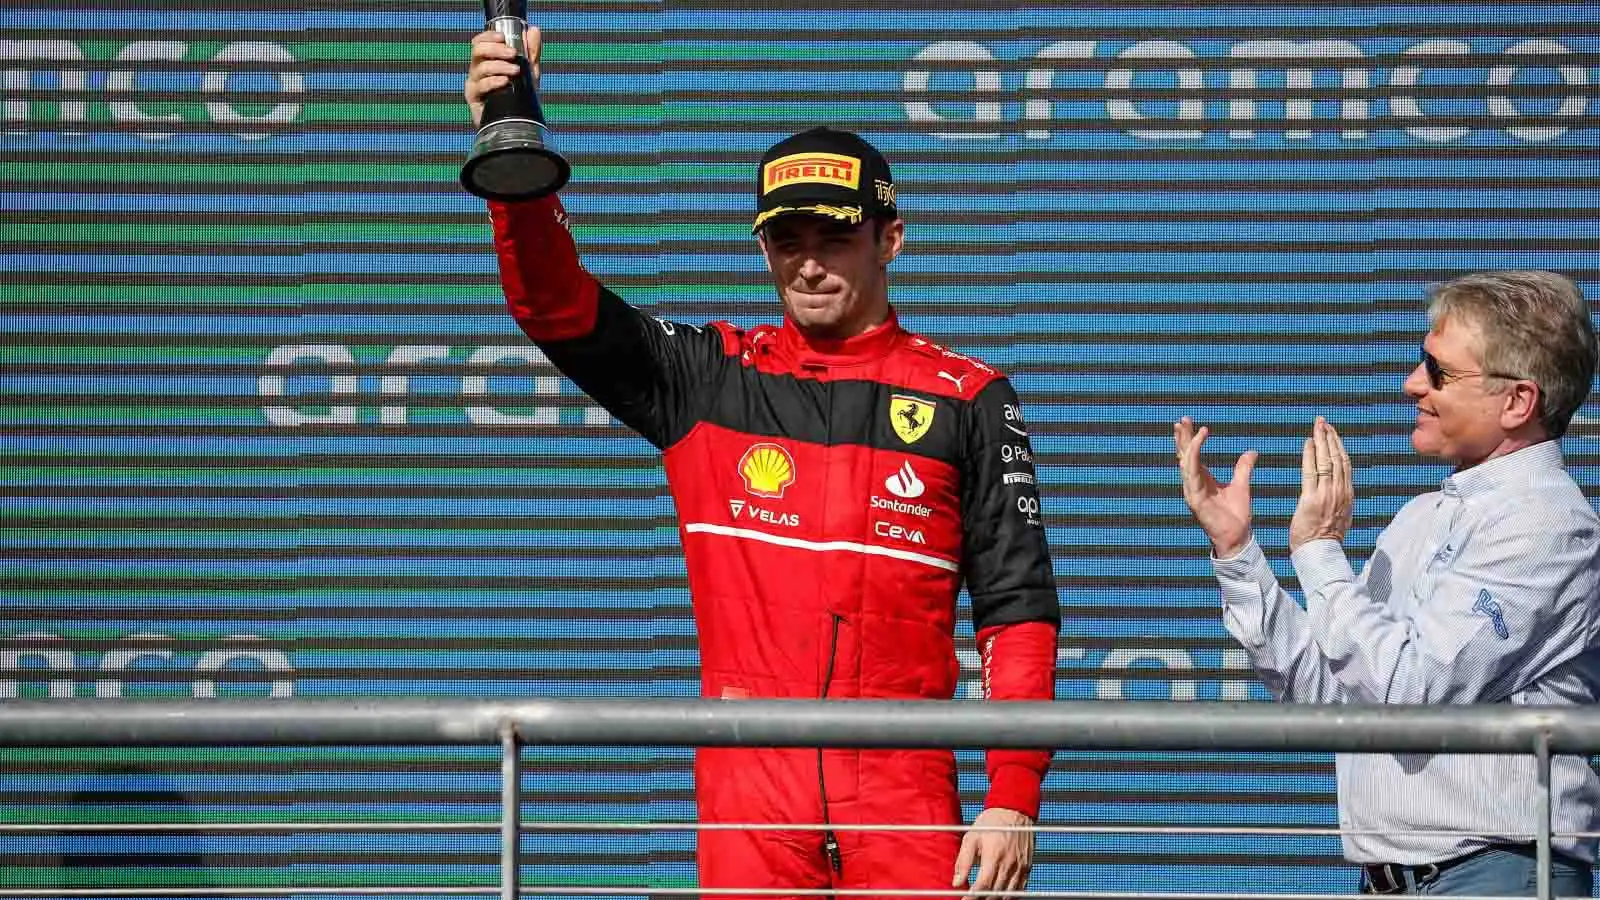 Ferrari driver Charles Leclerc on the podium. Austin October 2022.